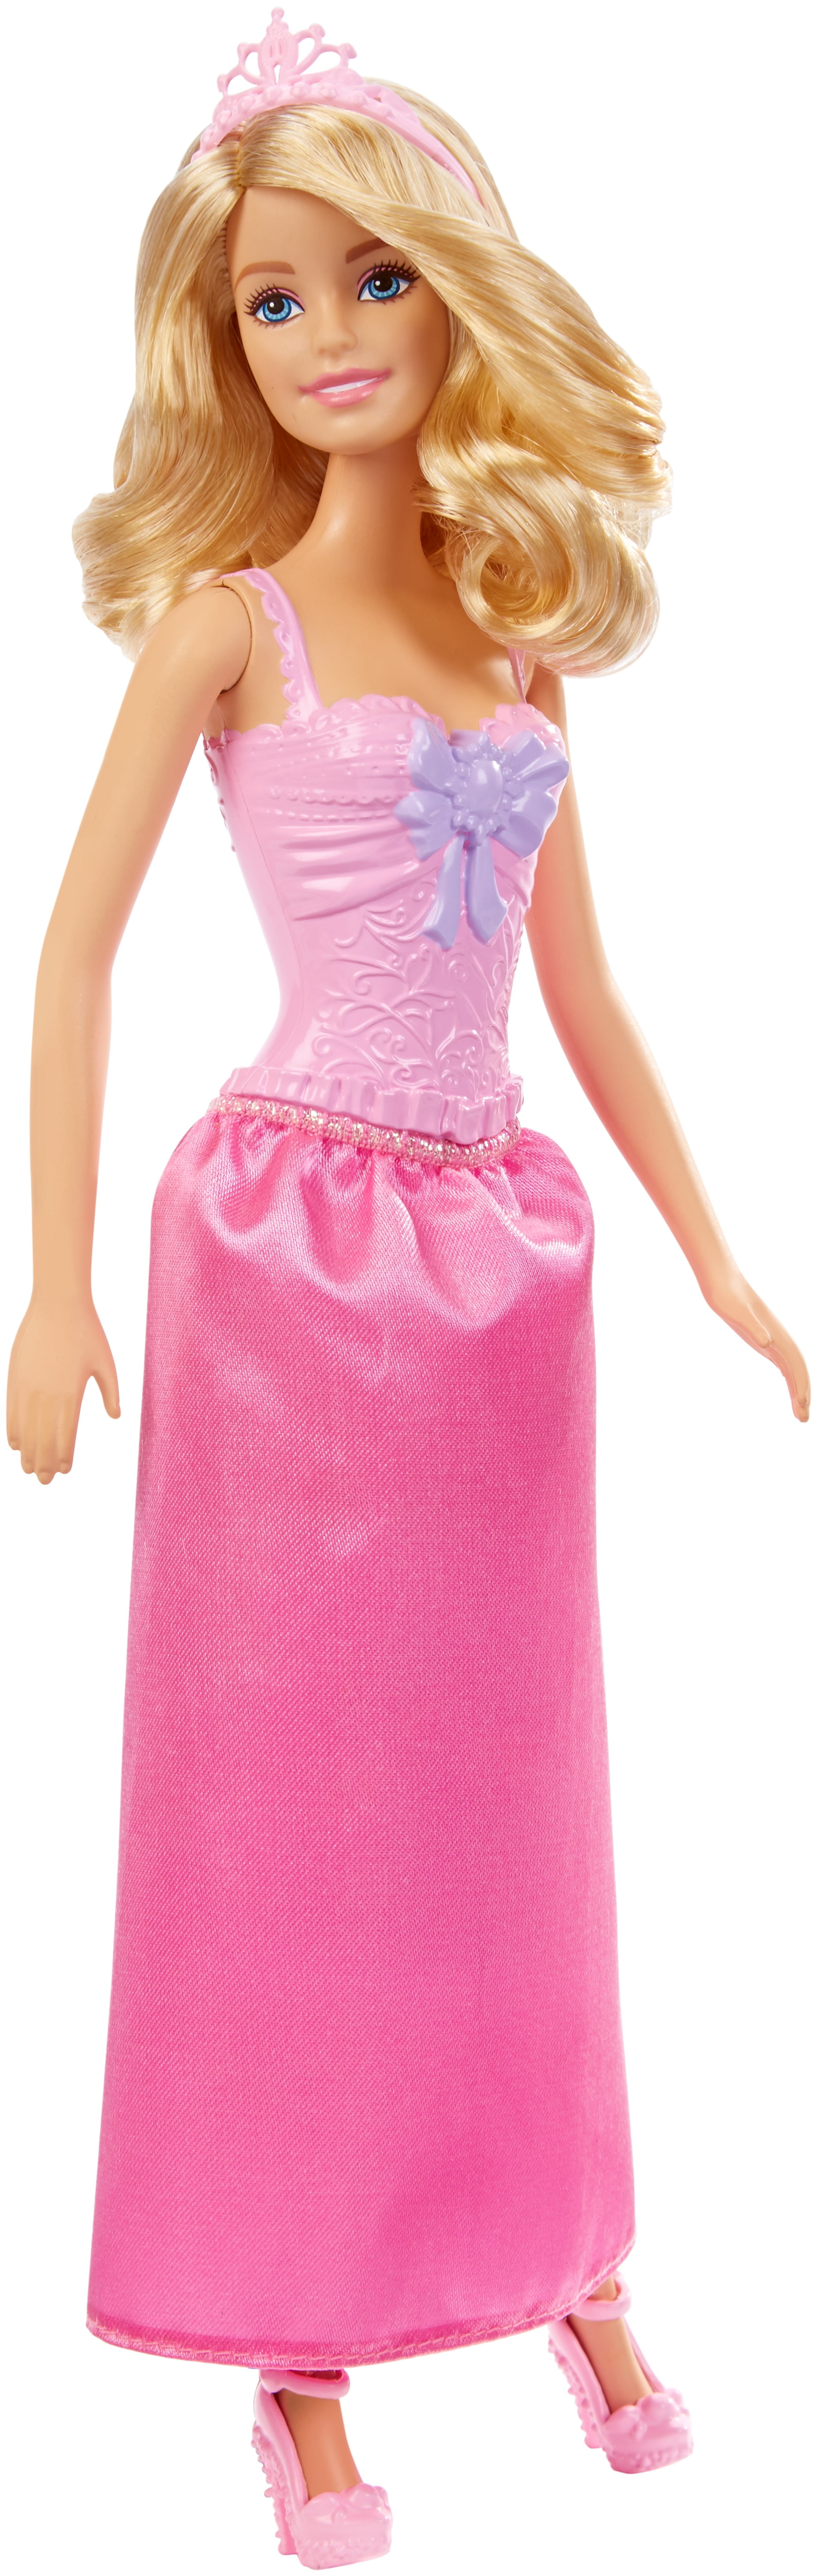 princess doll barbie doll